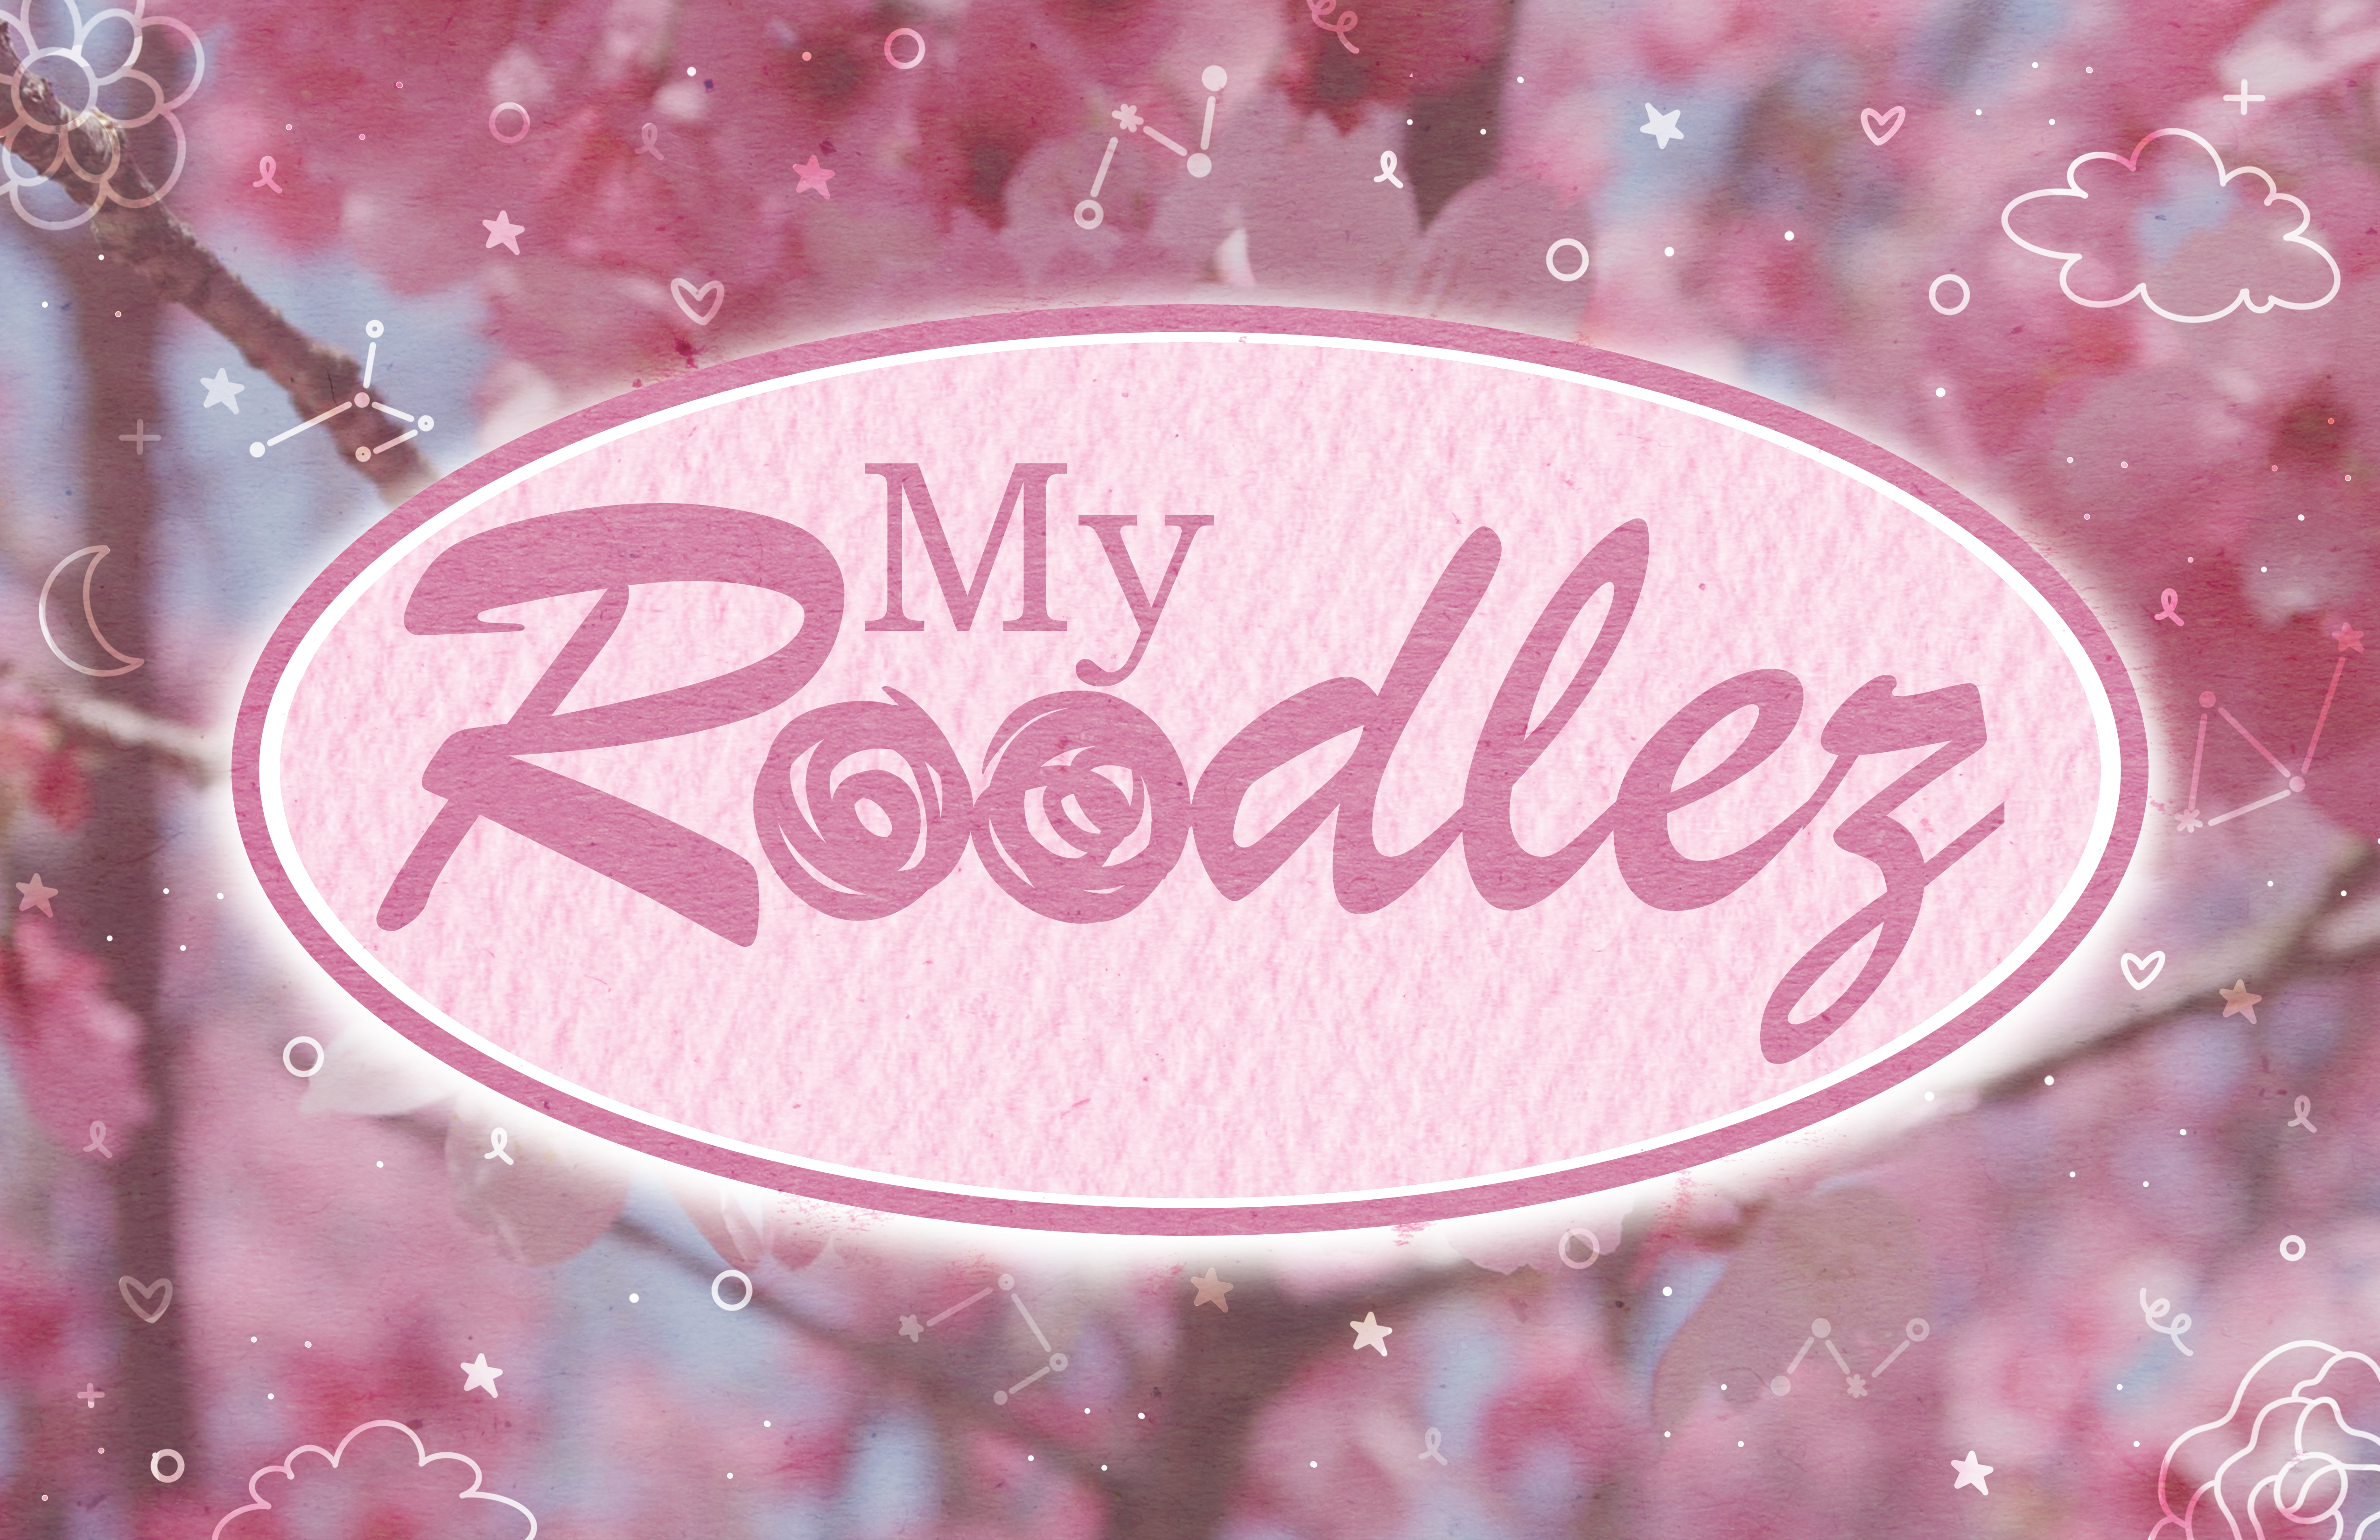 myRoodlez logo design. Pink and white.